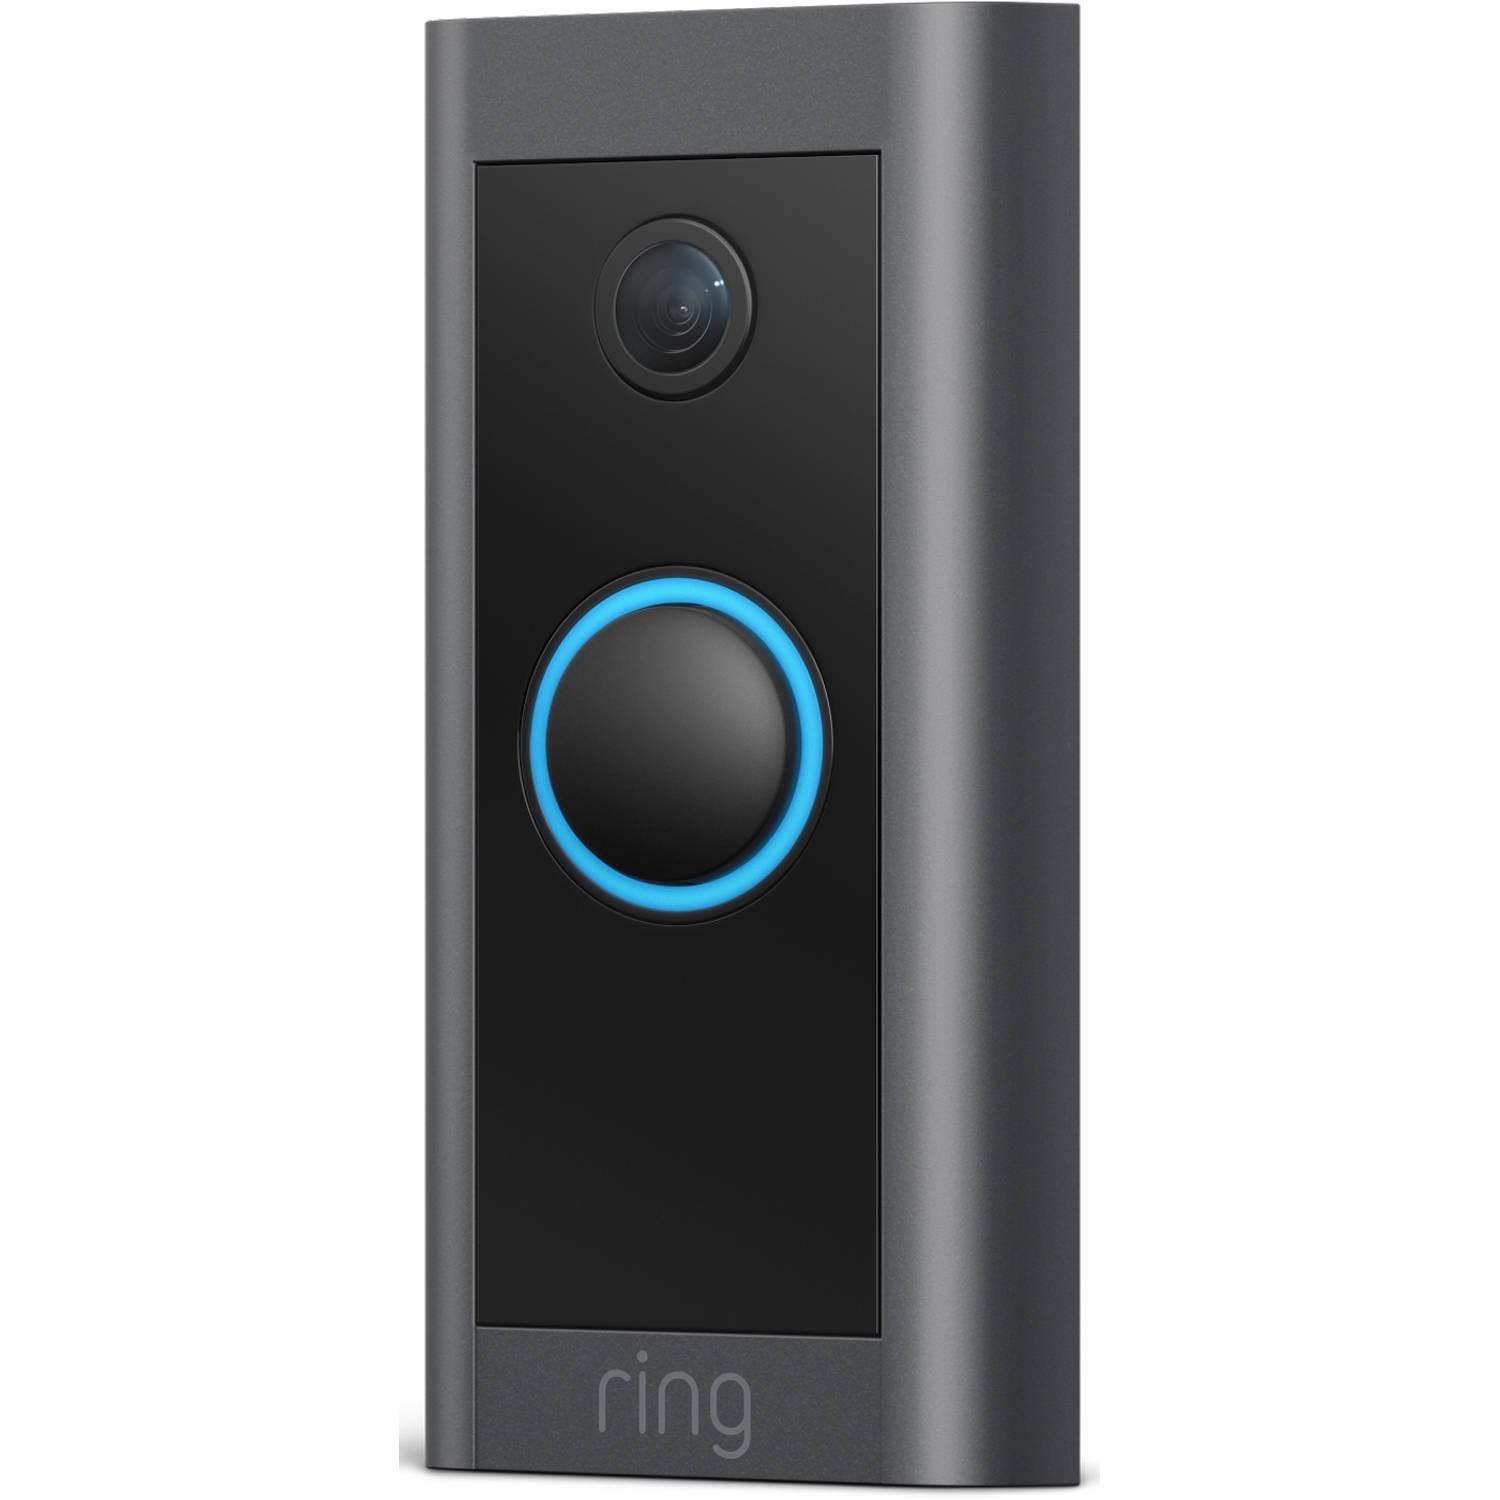  Ring Video Doorbell Wired / 8VRAGZ-0EU0-2